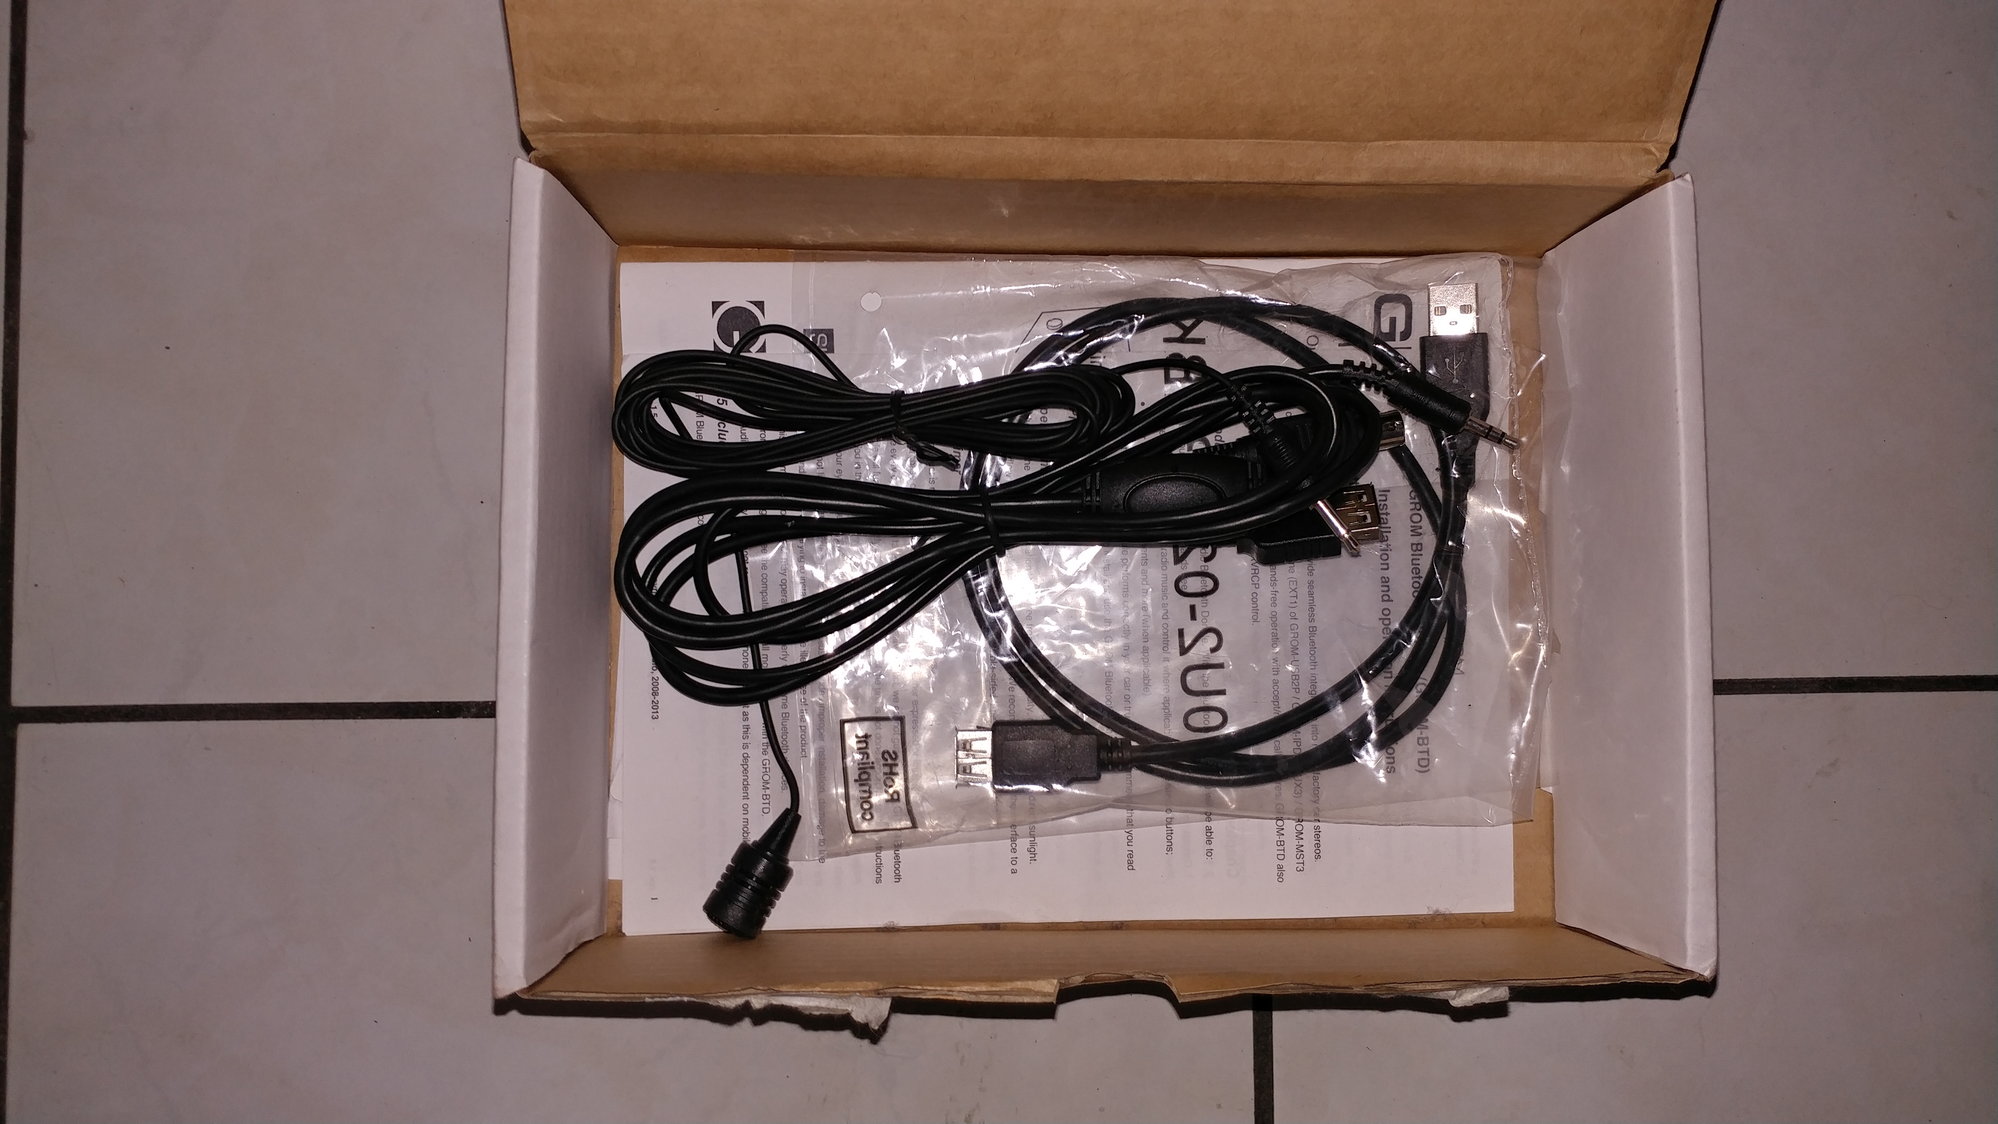 2008 Acura TL - Grom USB2 - Audio Video/Electronics - $104 - Houston, TX 77584, United States